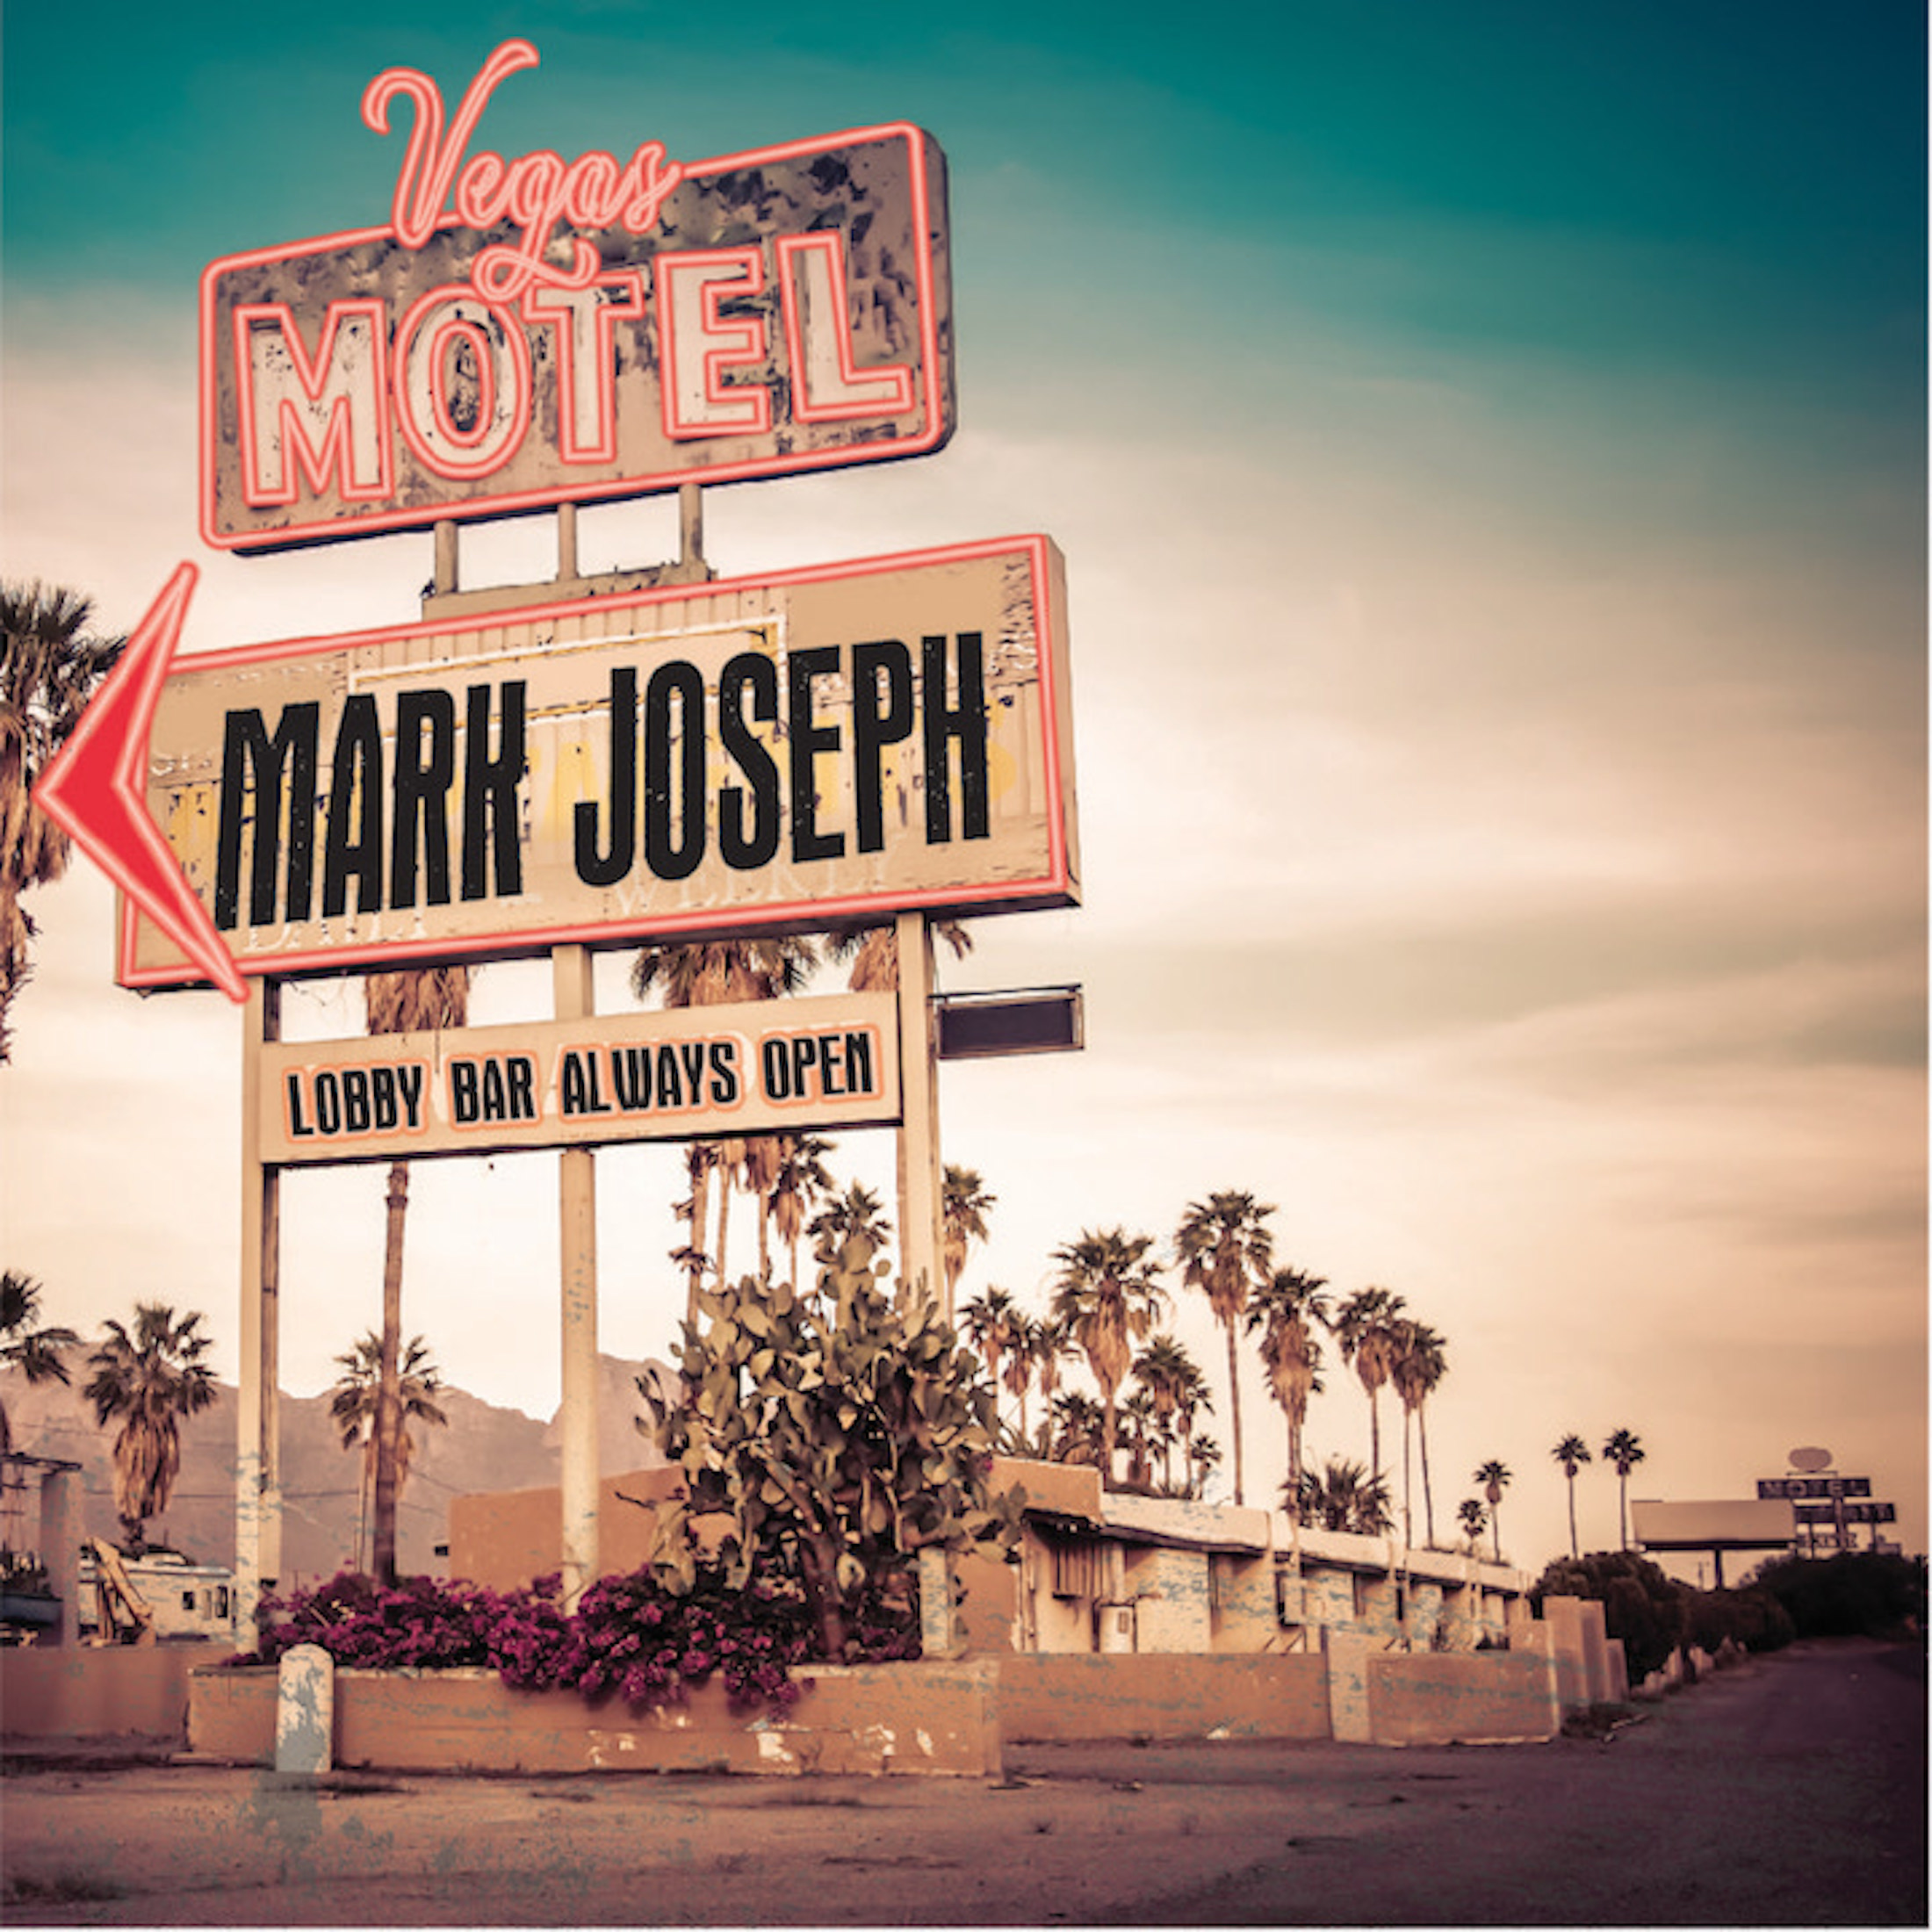 Mark Joseph's Solo new album 'Vegas Motel' is Oh so soulful